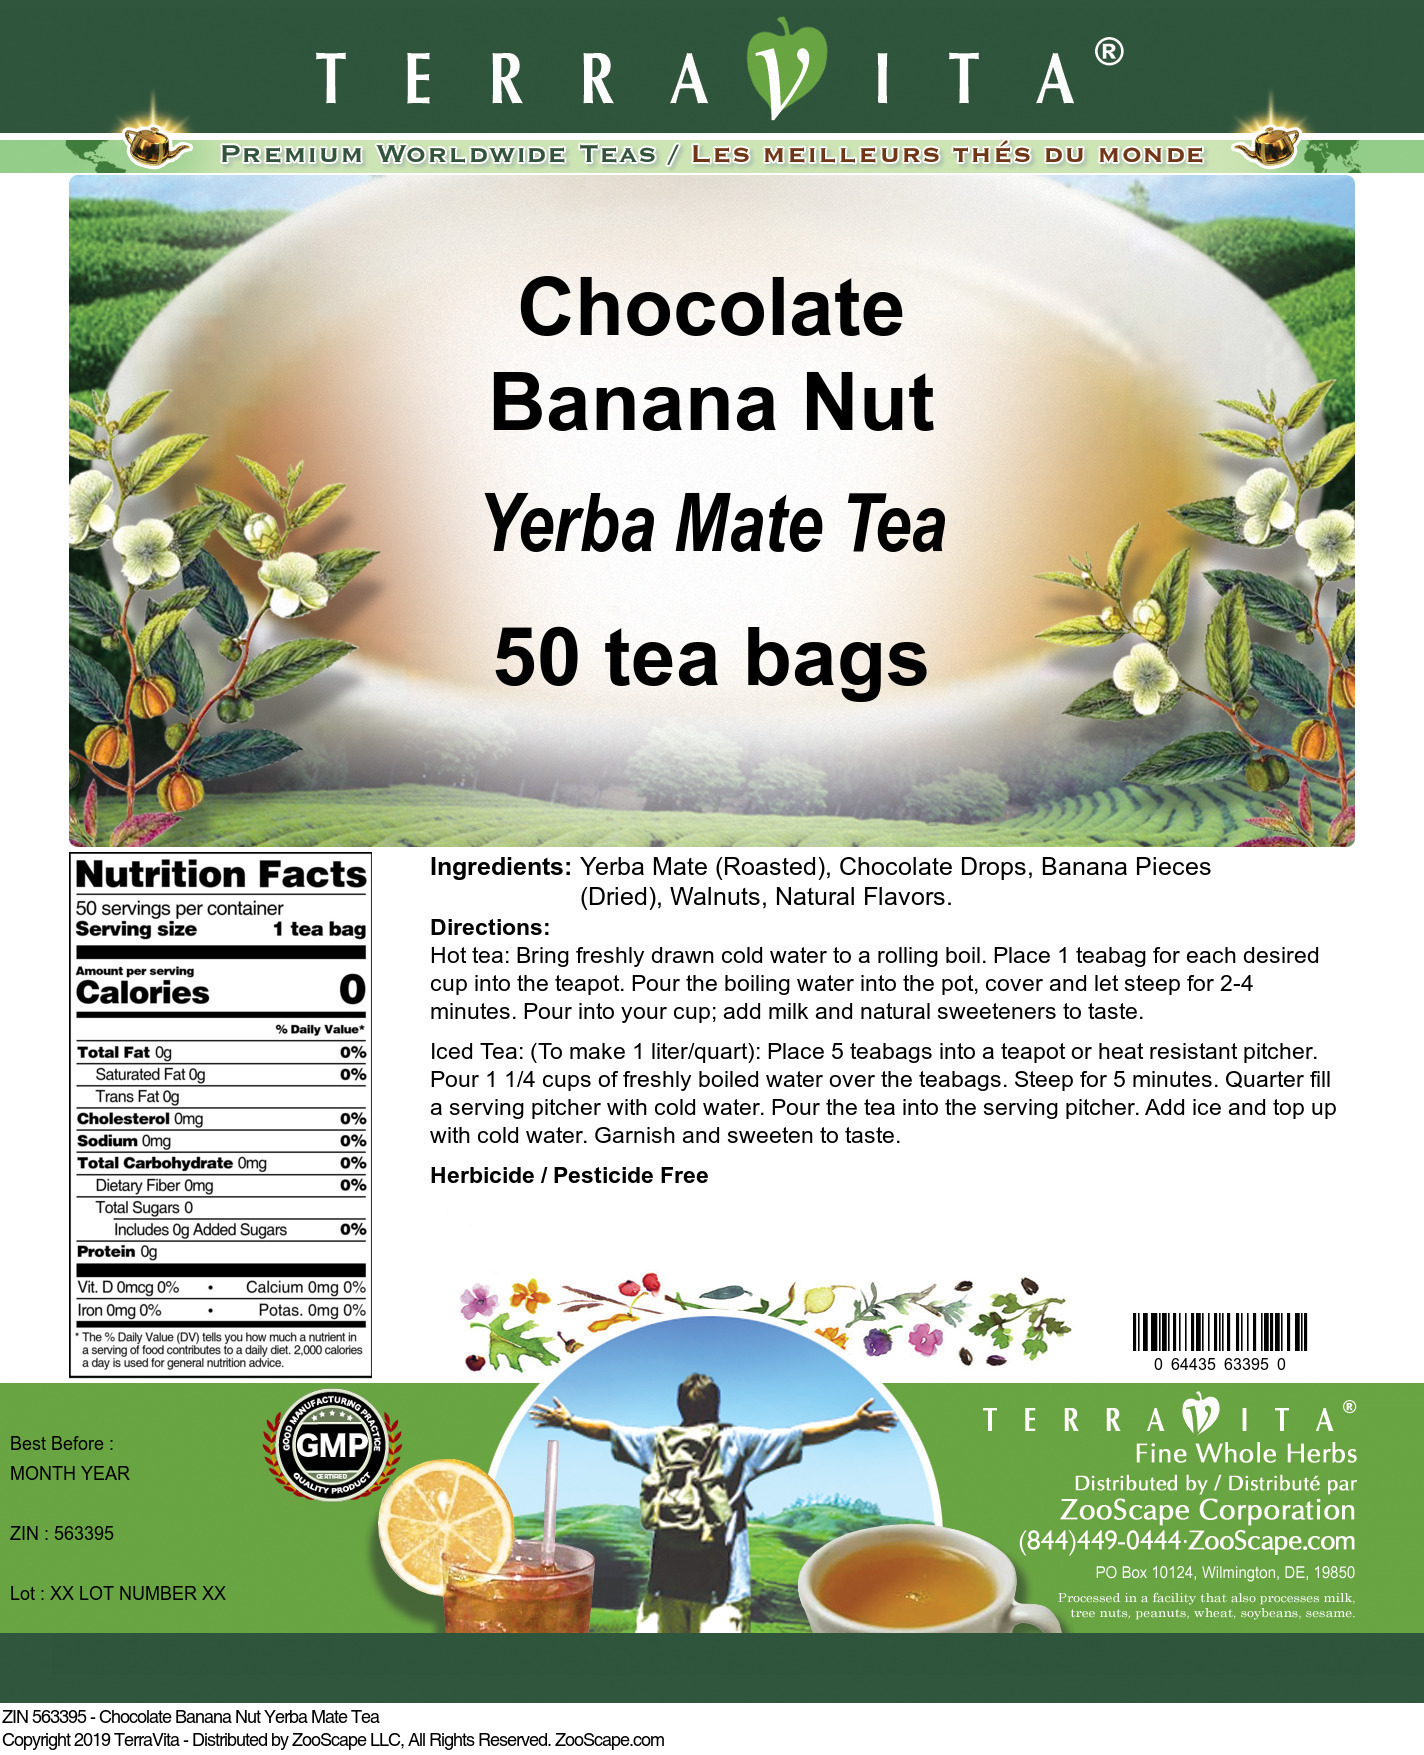 Chocolate Banana Nut Yerba Mate Tea - Label